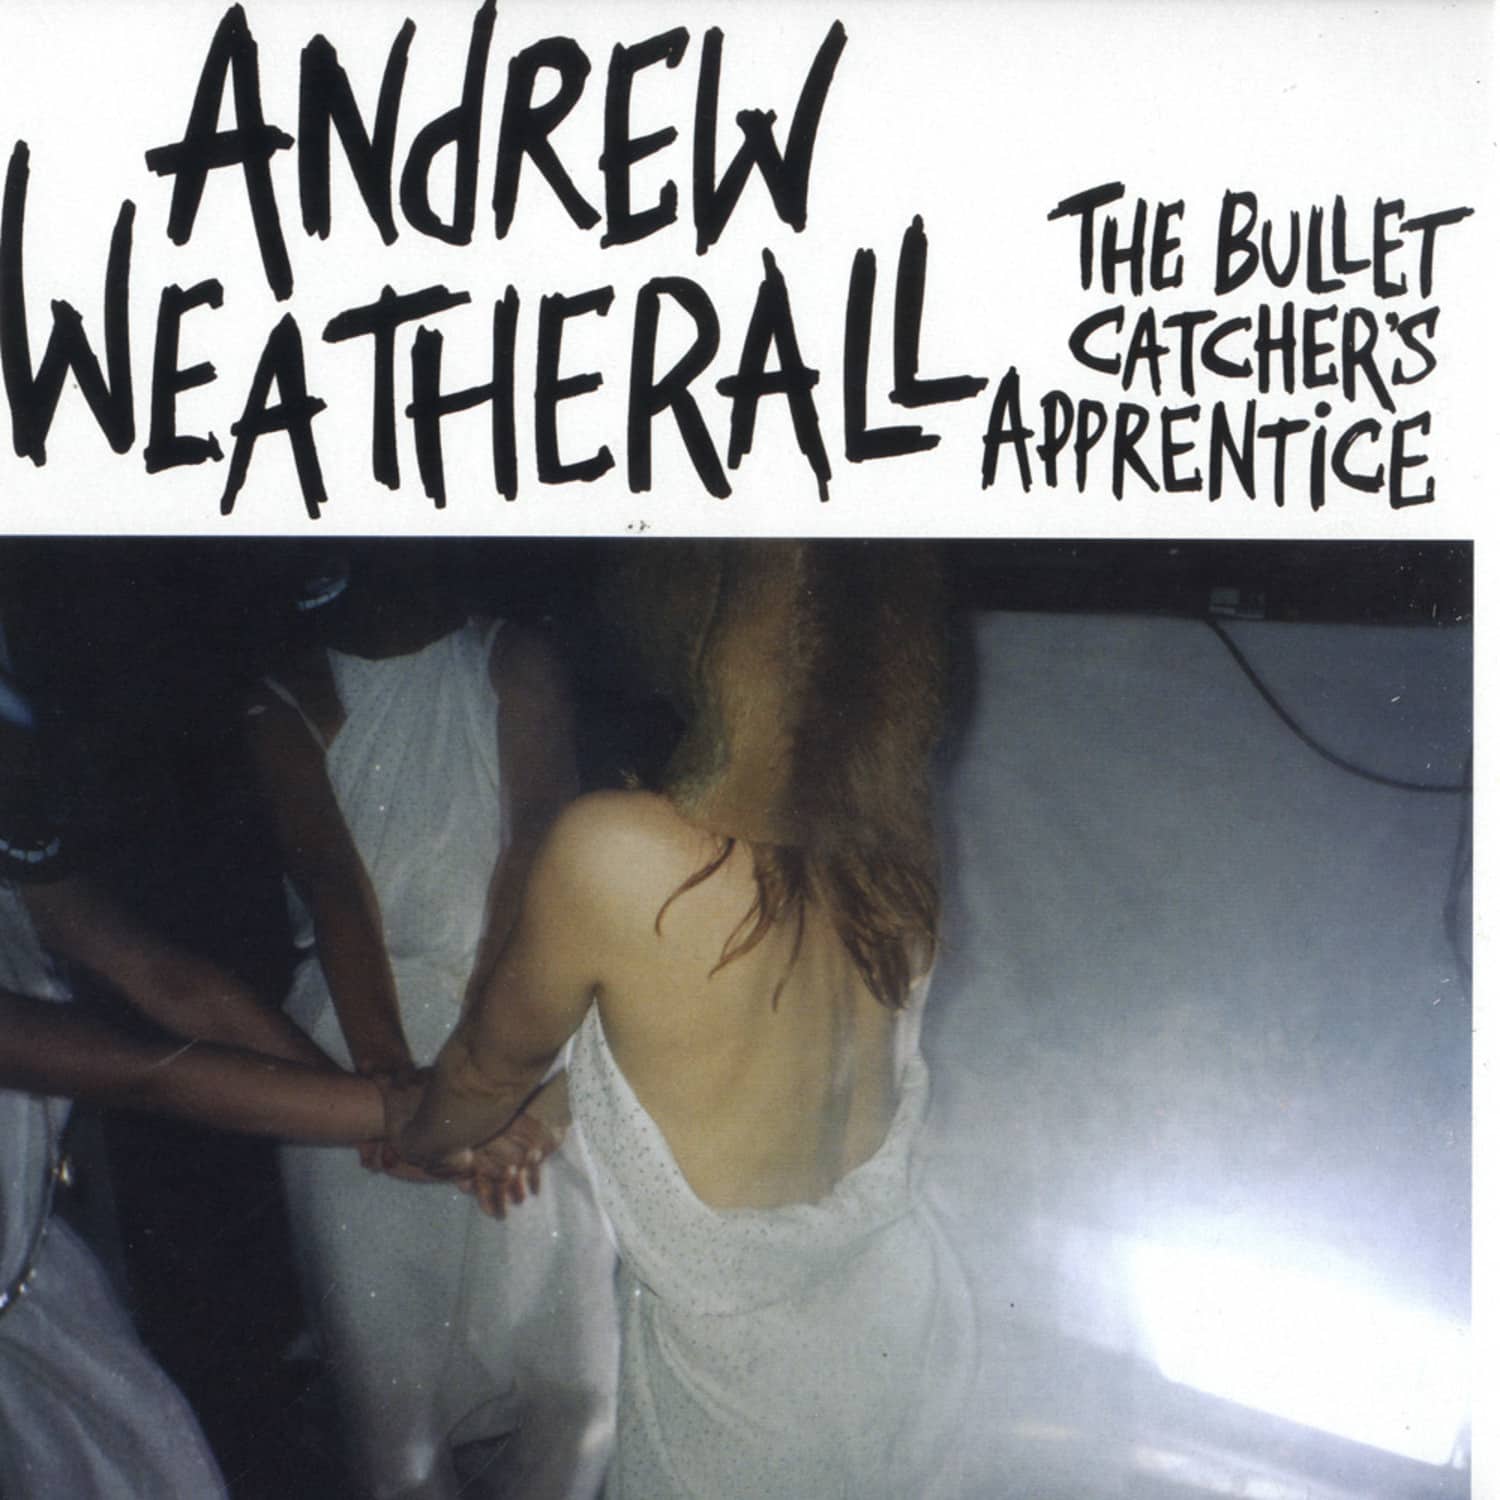 Andrew Weatherall - THE BULLET CATCHERS APPRENTICE